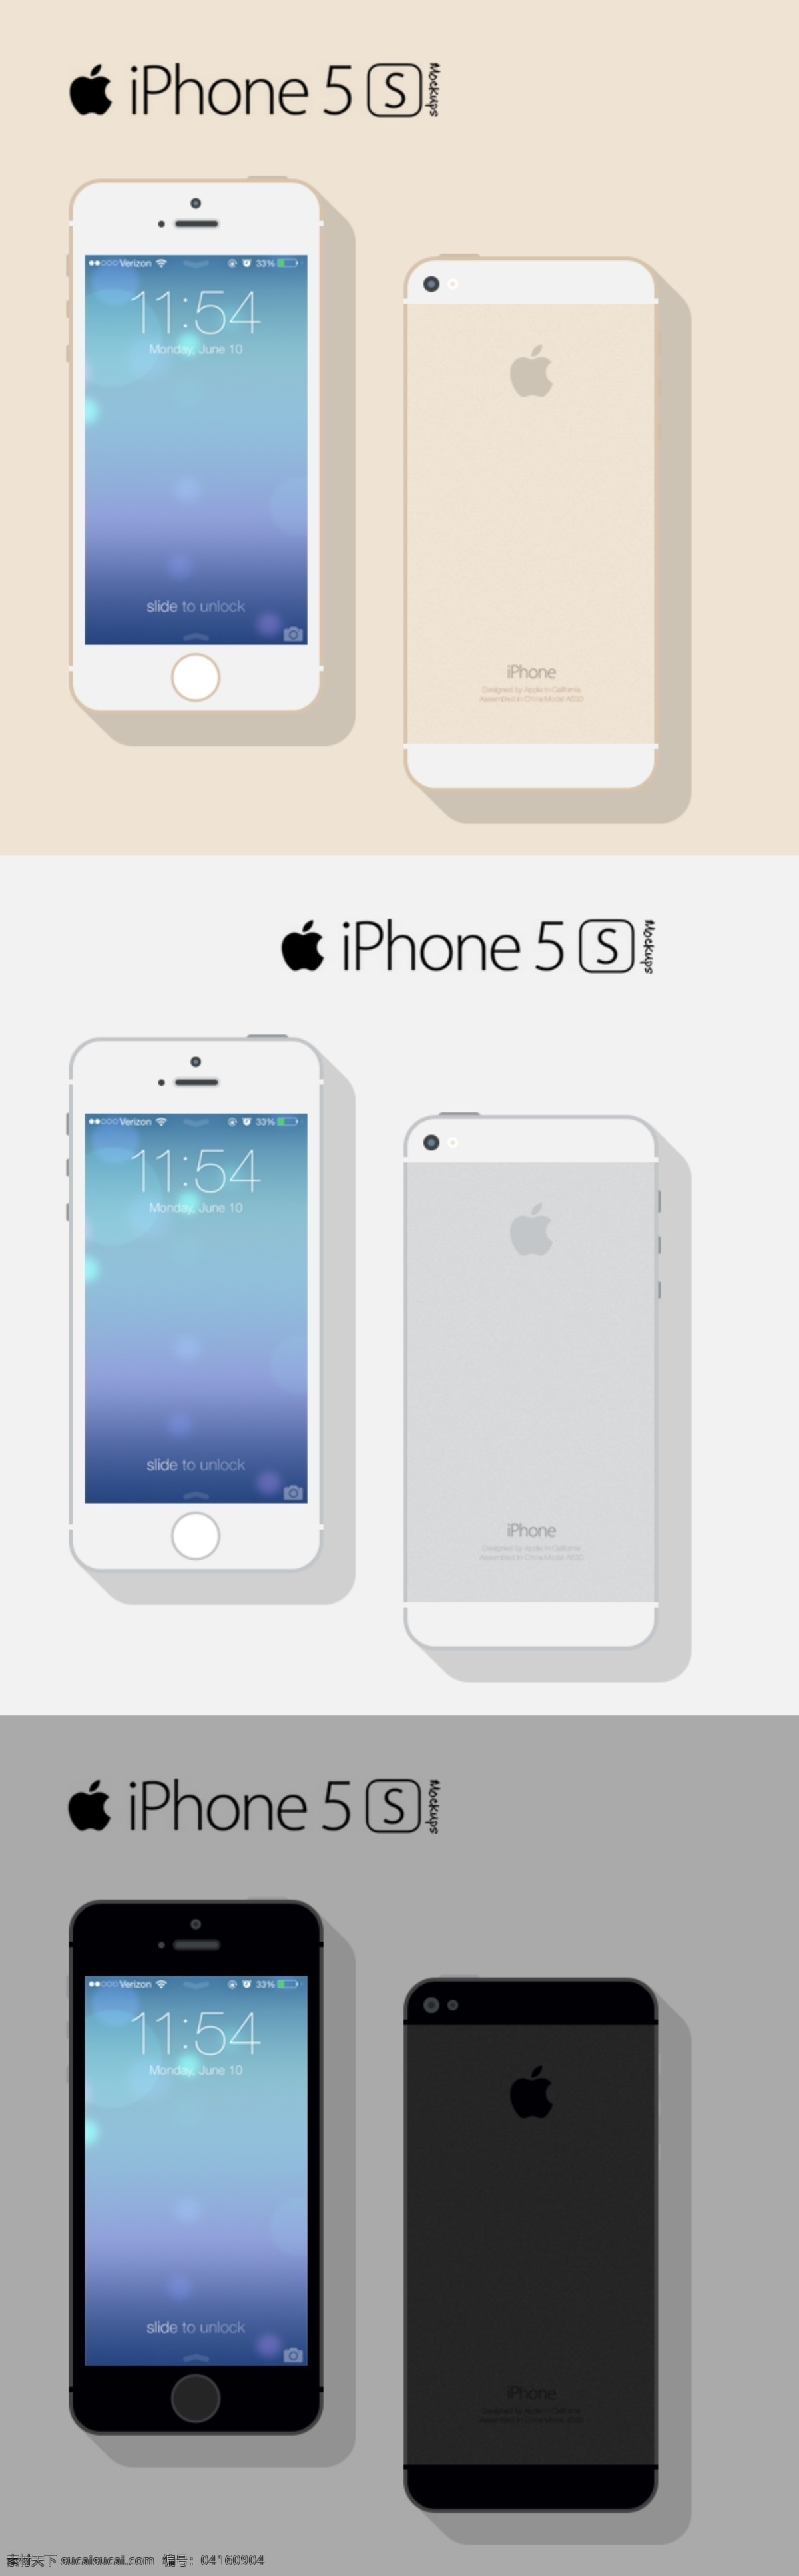 5s 三 色 扁平 界面设计 iphone 白色 黑色 蓝色 三色扁平界面 psd源文件